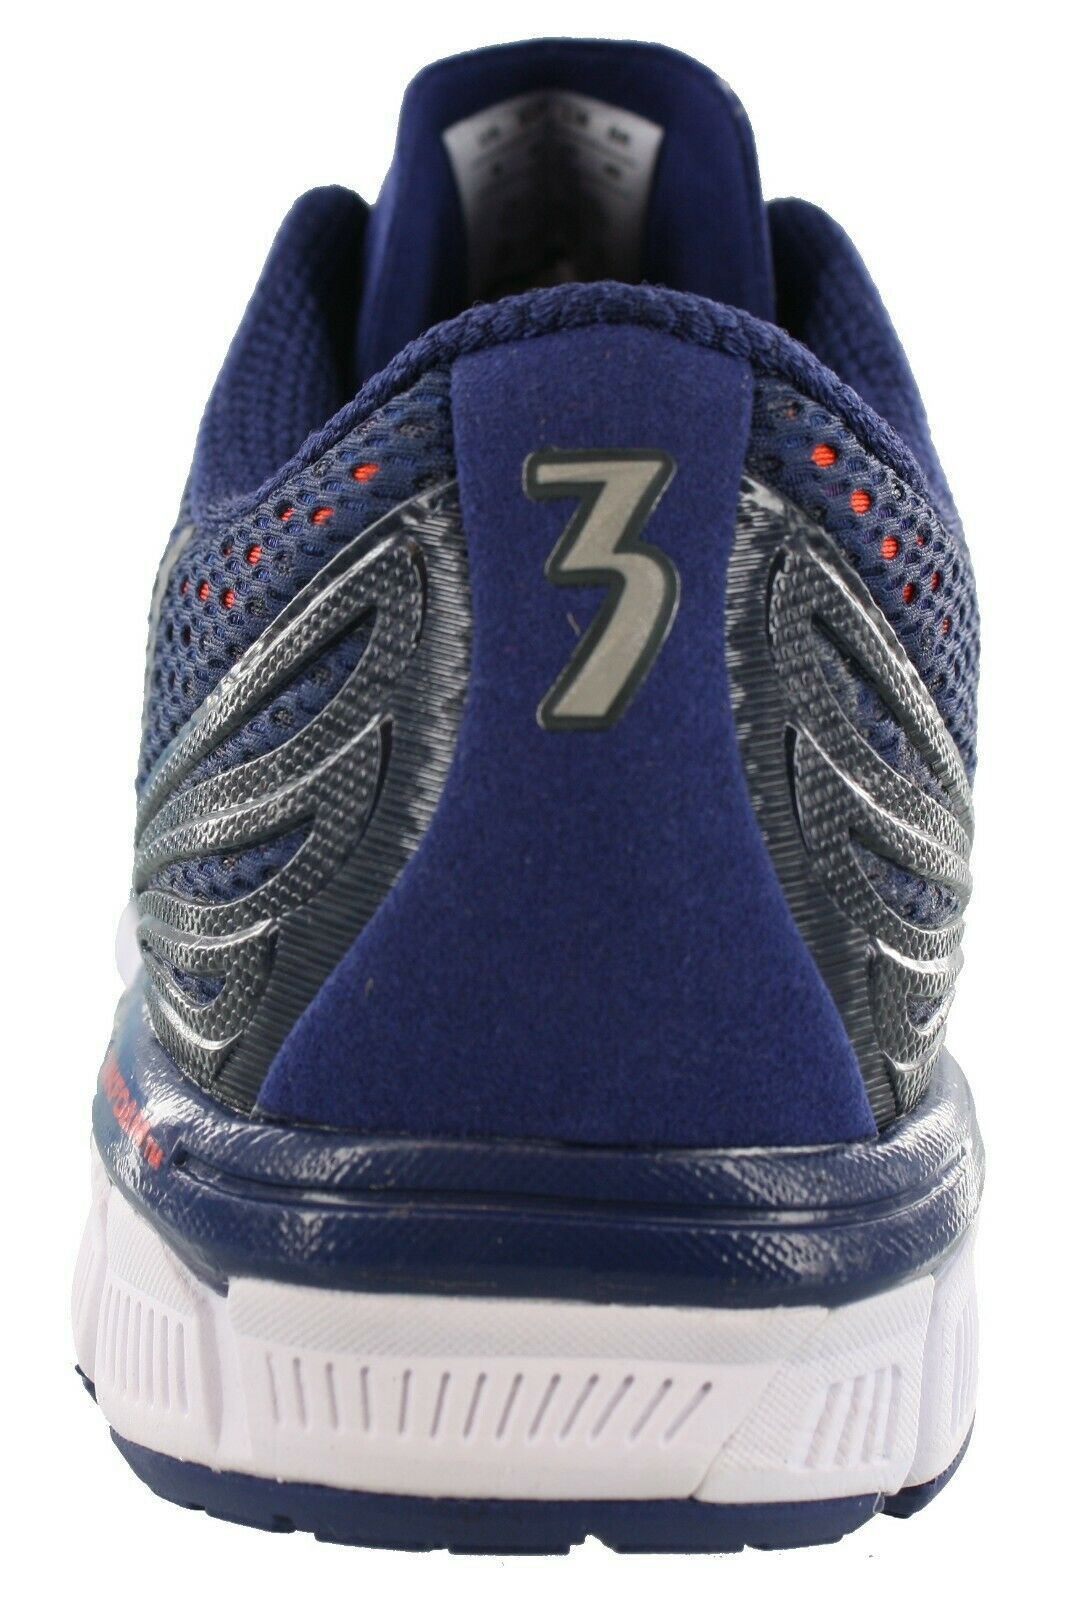 361 Degrees Men's Stratomic Running Shoes - image 4 of 5